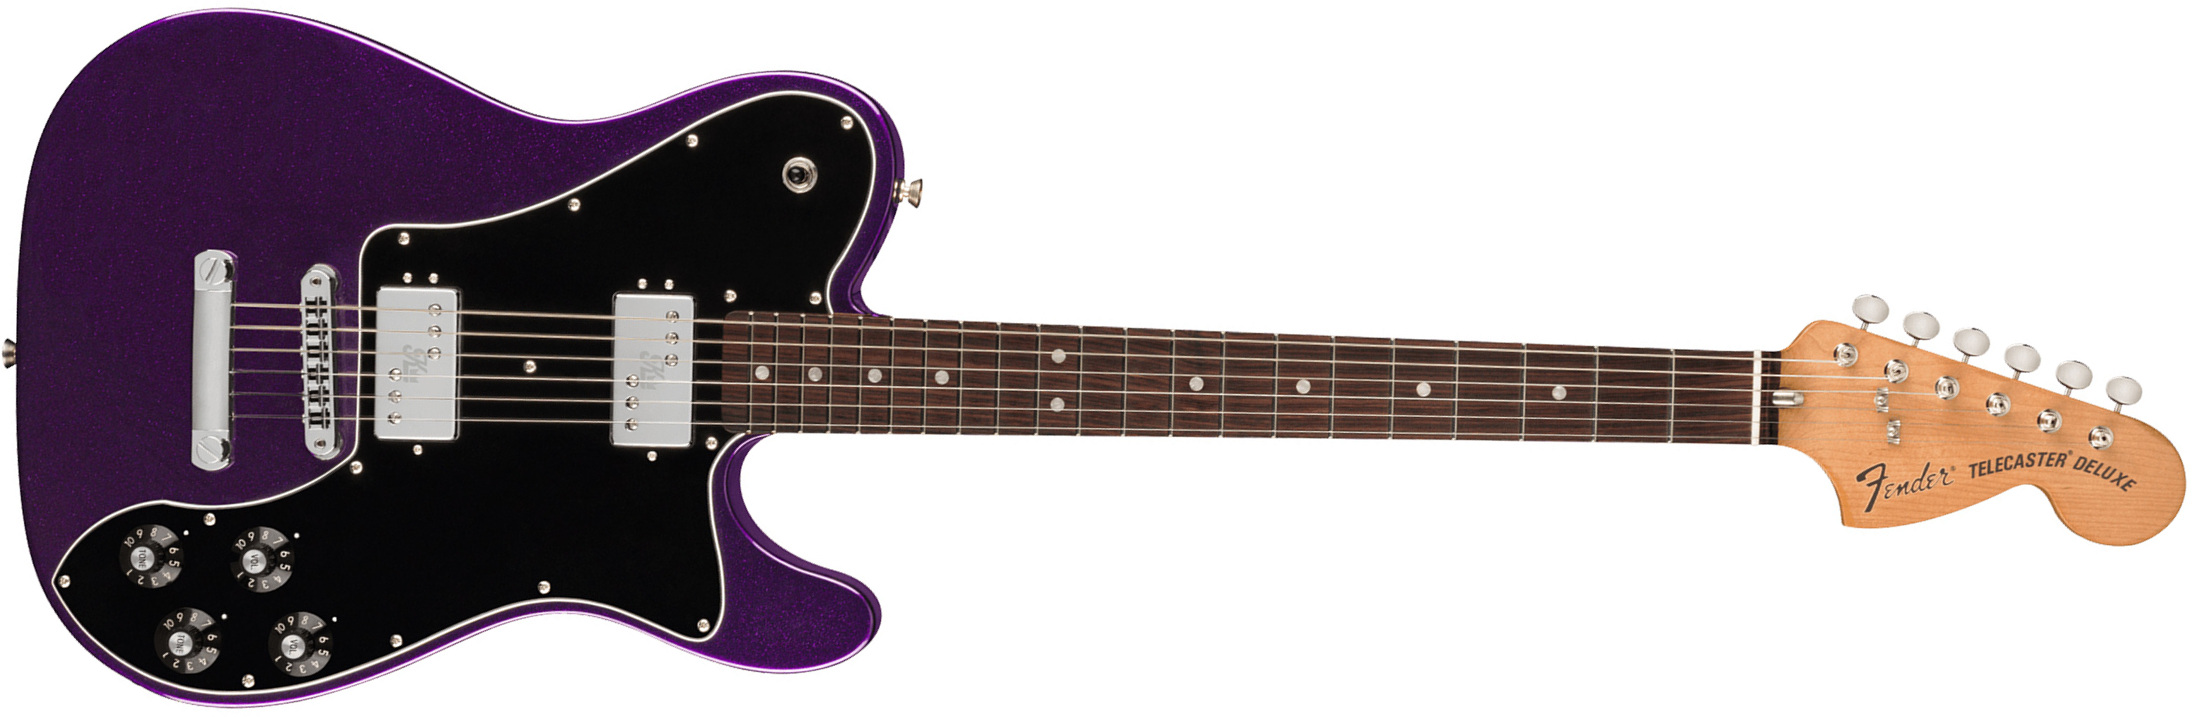 Fender Kingfish Tele Deluxe Usa Signature Hh Ht Rw - Mississippi Night - Guitare Électrique Forme Tel - Main picture